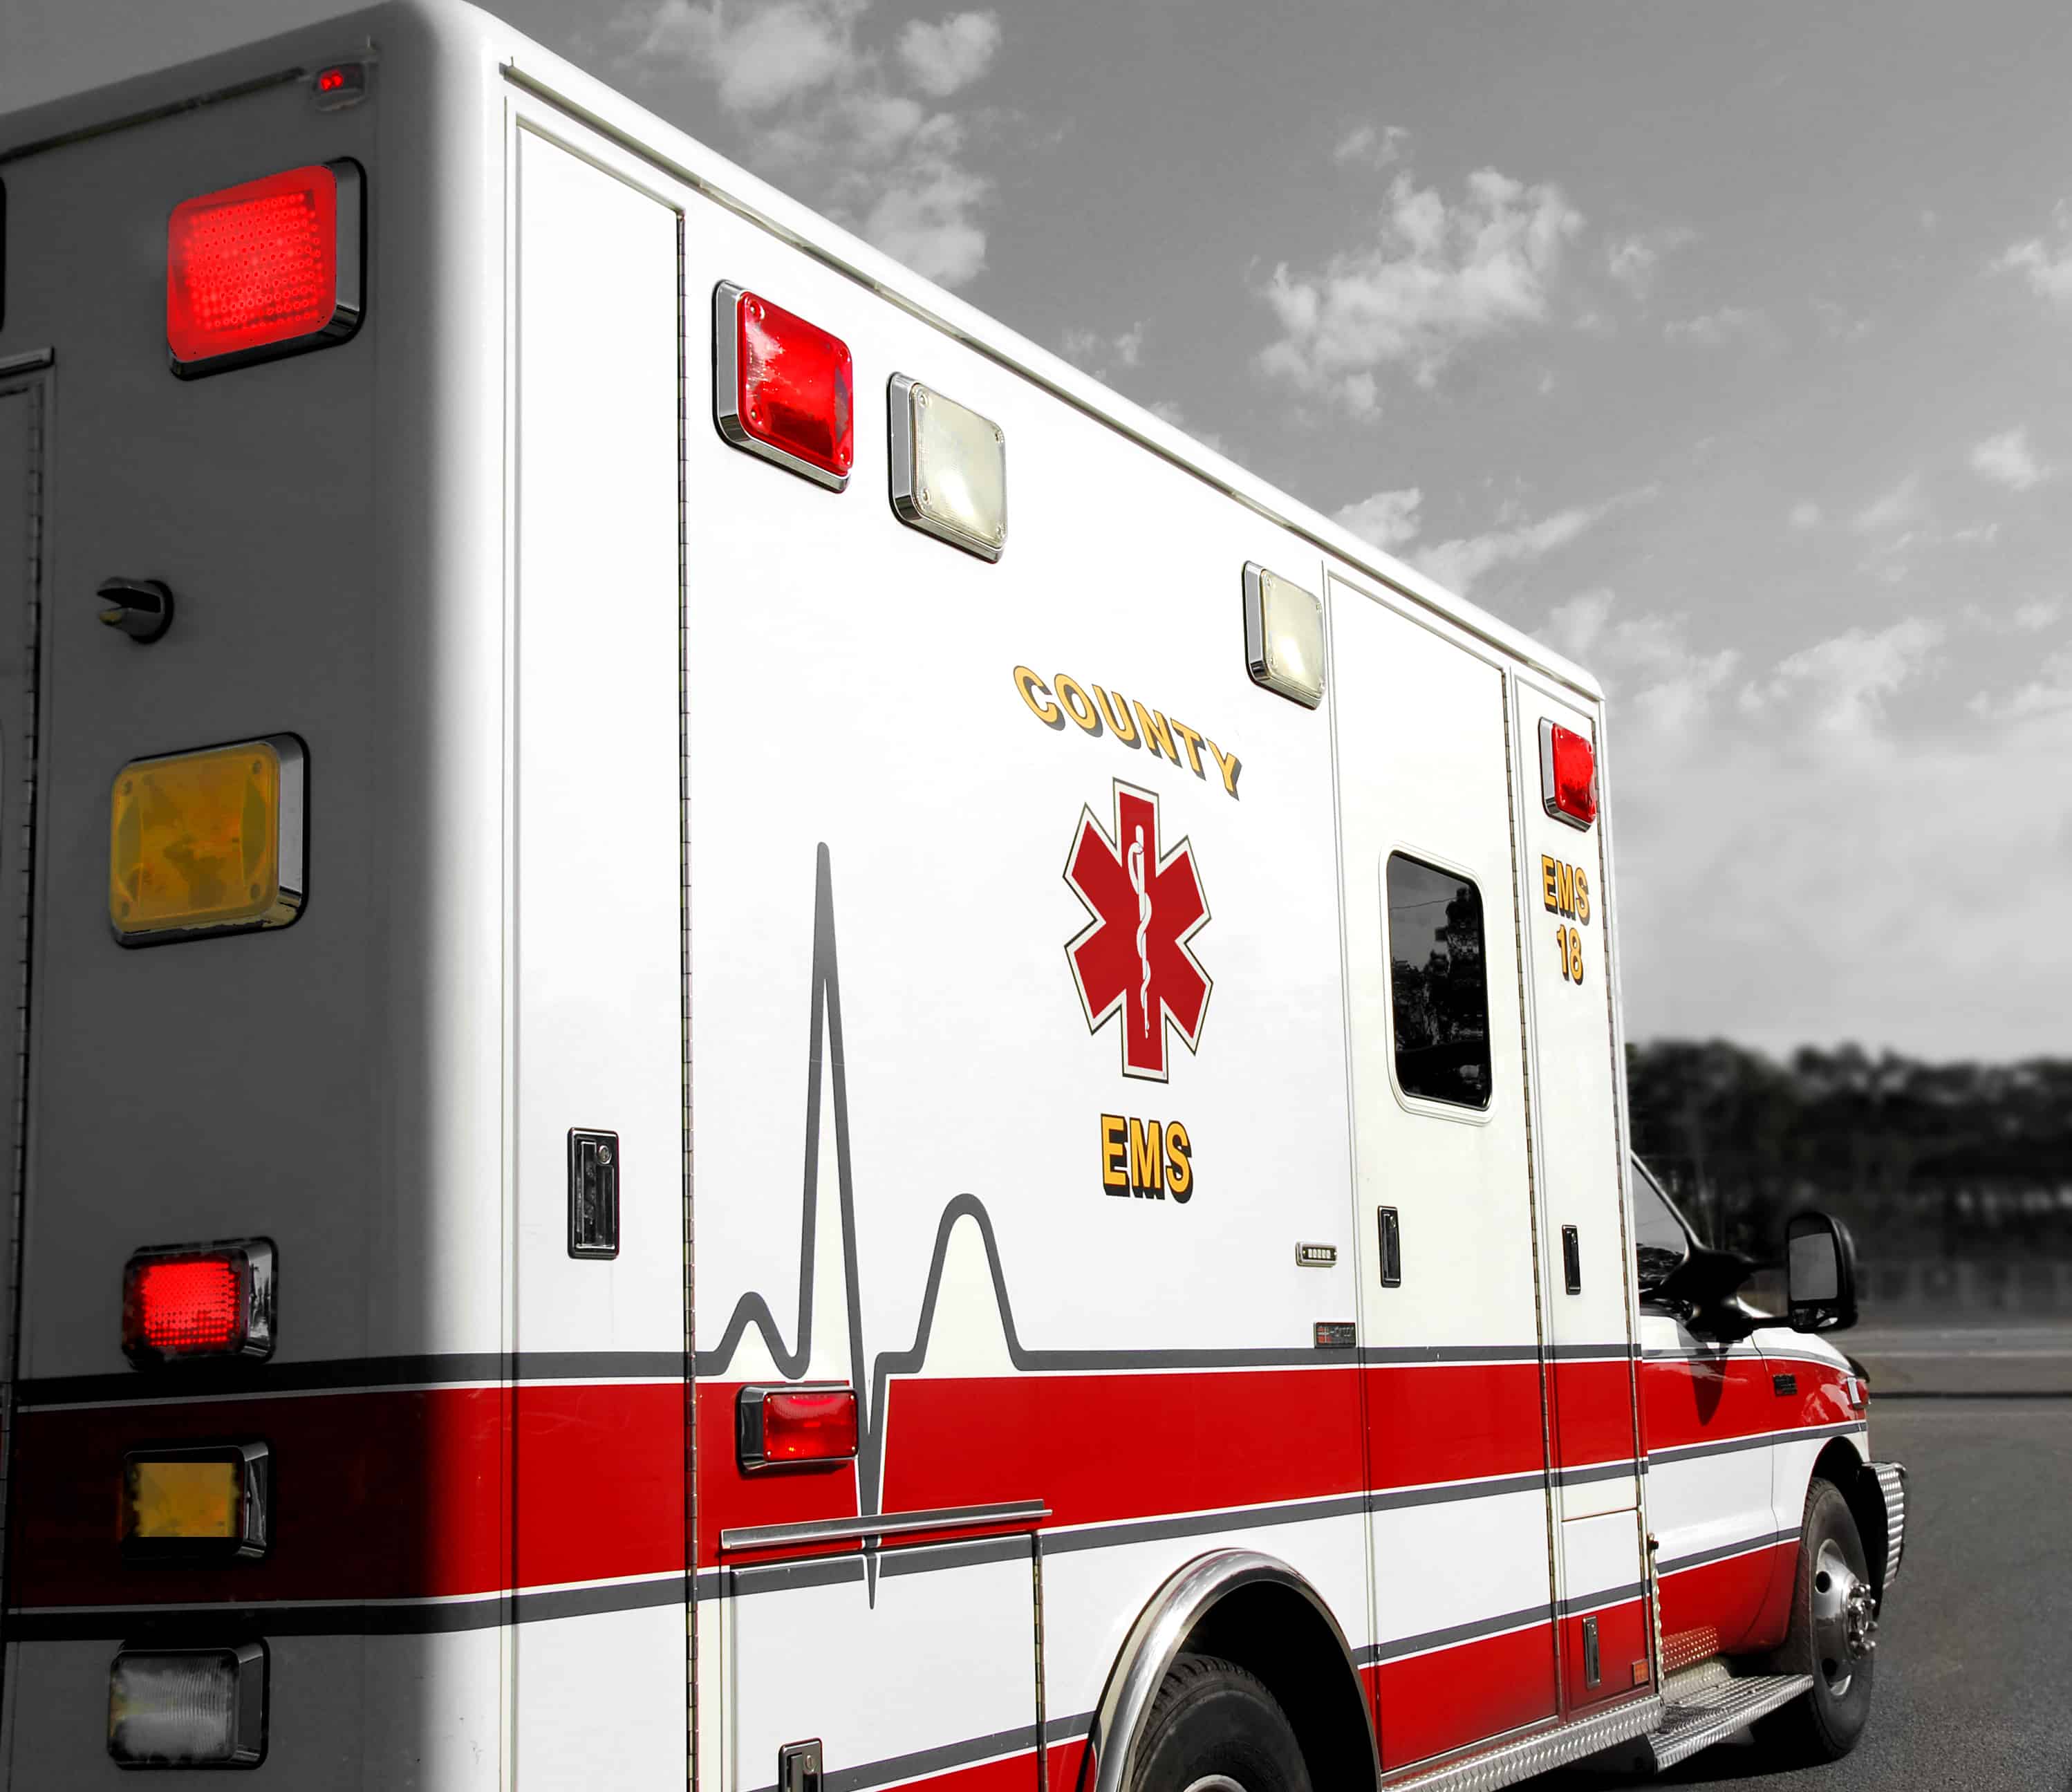 1 Injured in Sierra Highway Vehicle Crash [Santa Clarita, CA]